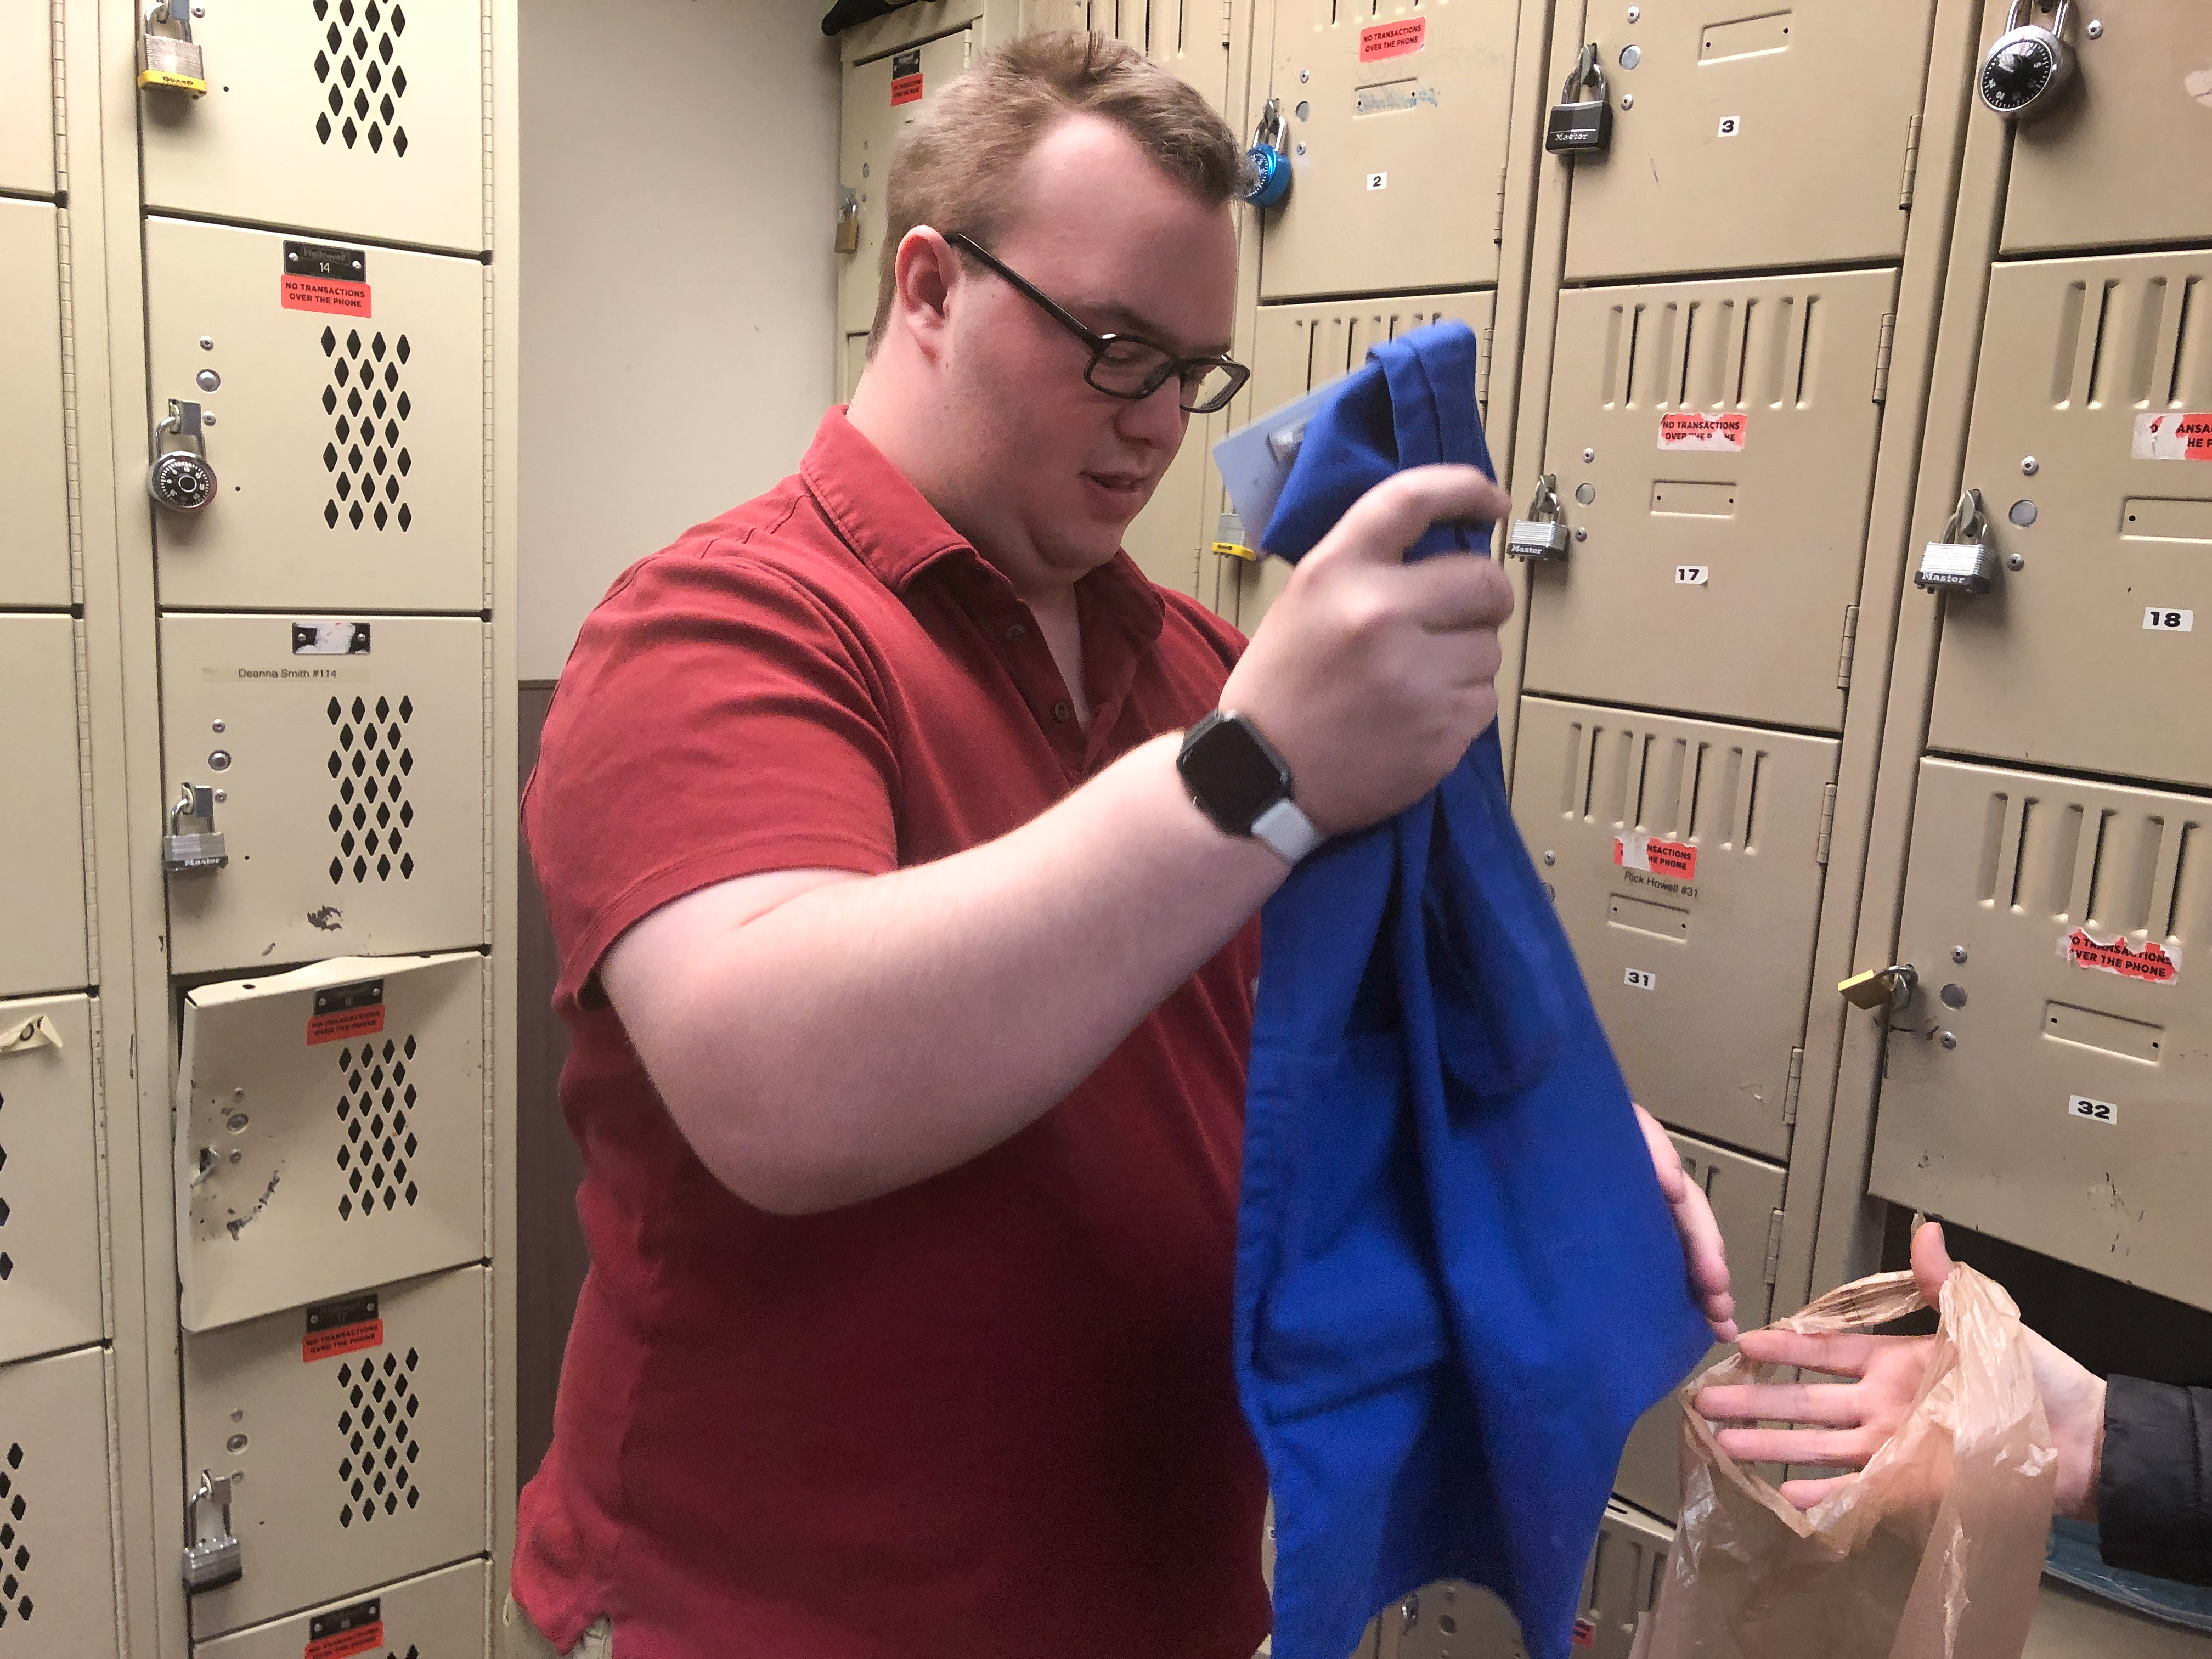 Ben puts his apron away in a locker room